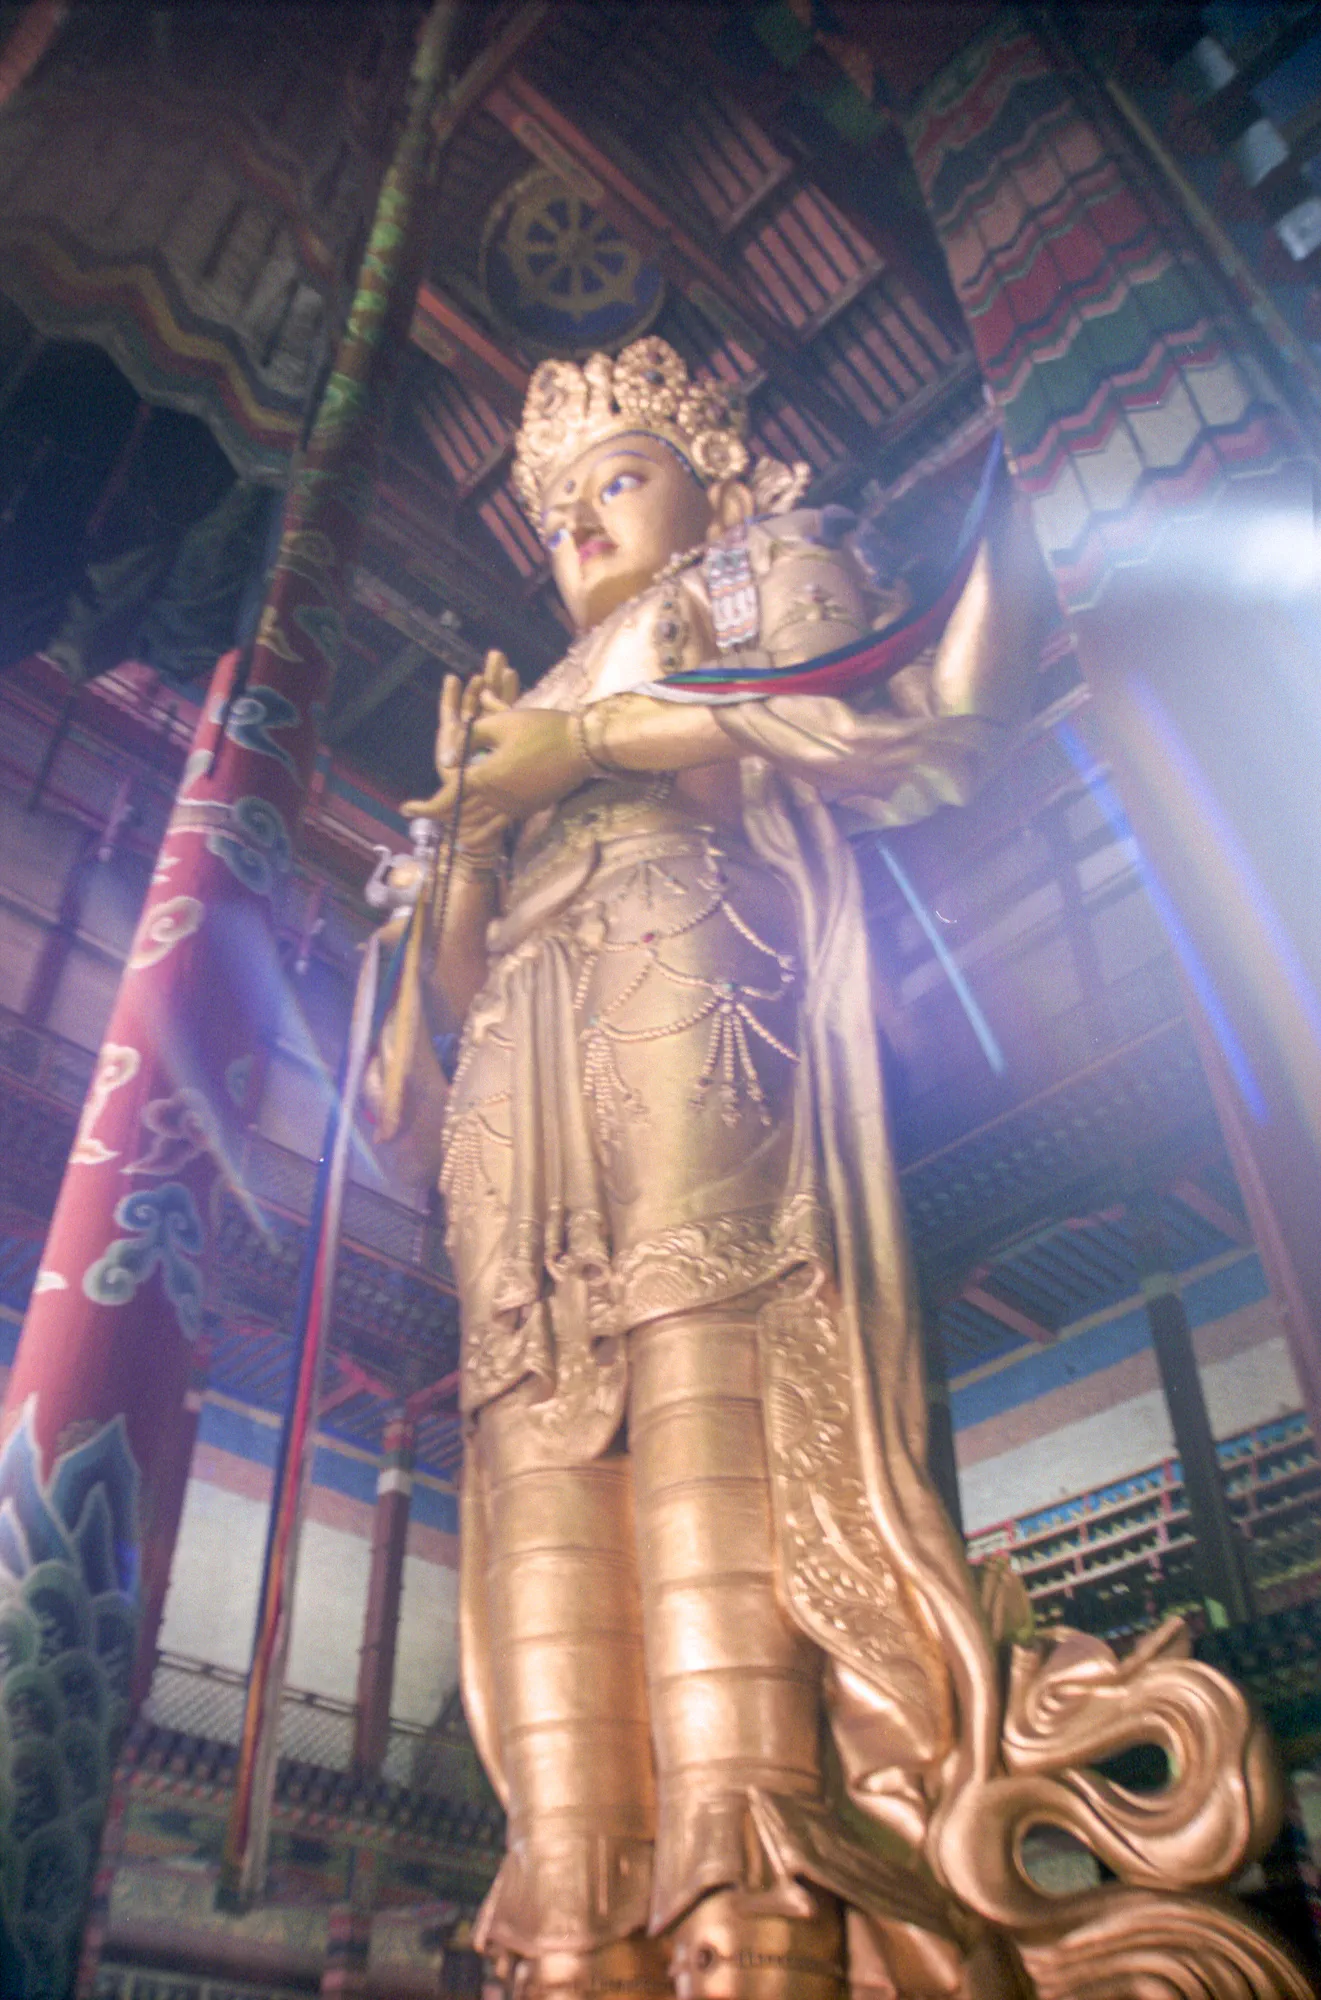 Boddhisattva Avalokiteshvara at Gandantegchinlen Monastery